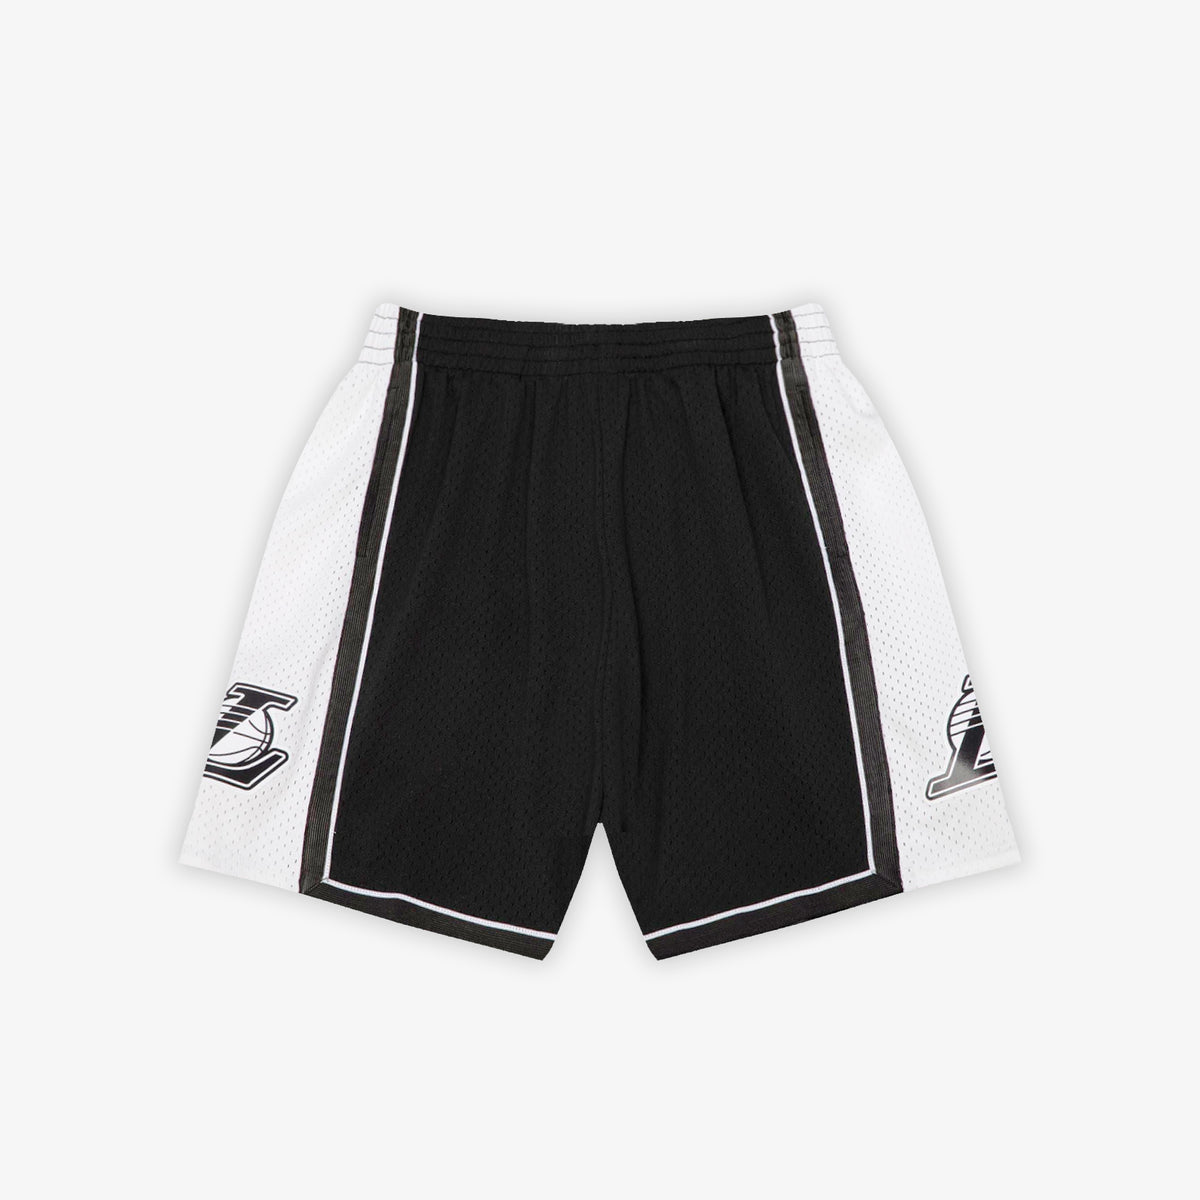 Los Angeles Lakers White Logo Swingman Shorts - Black